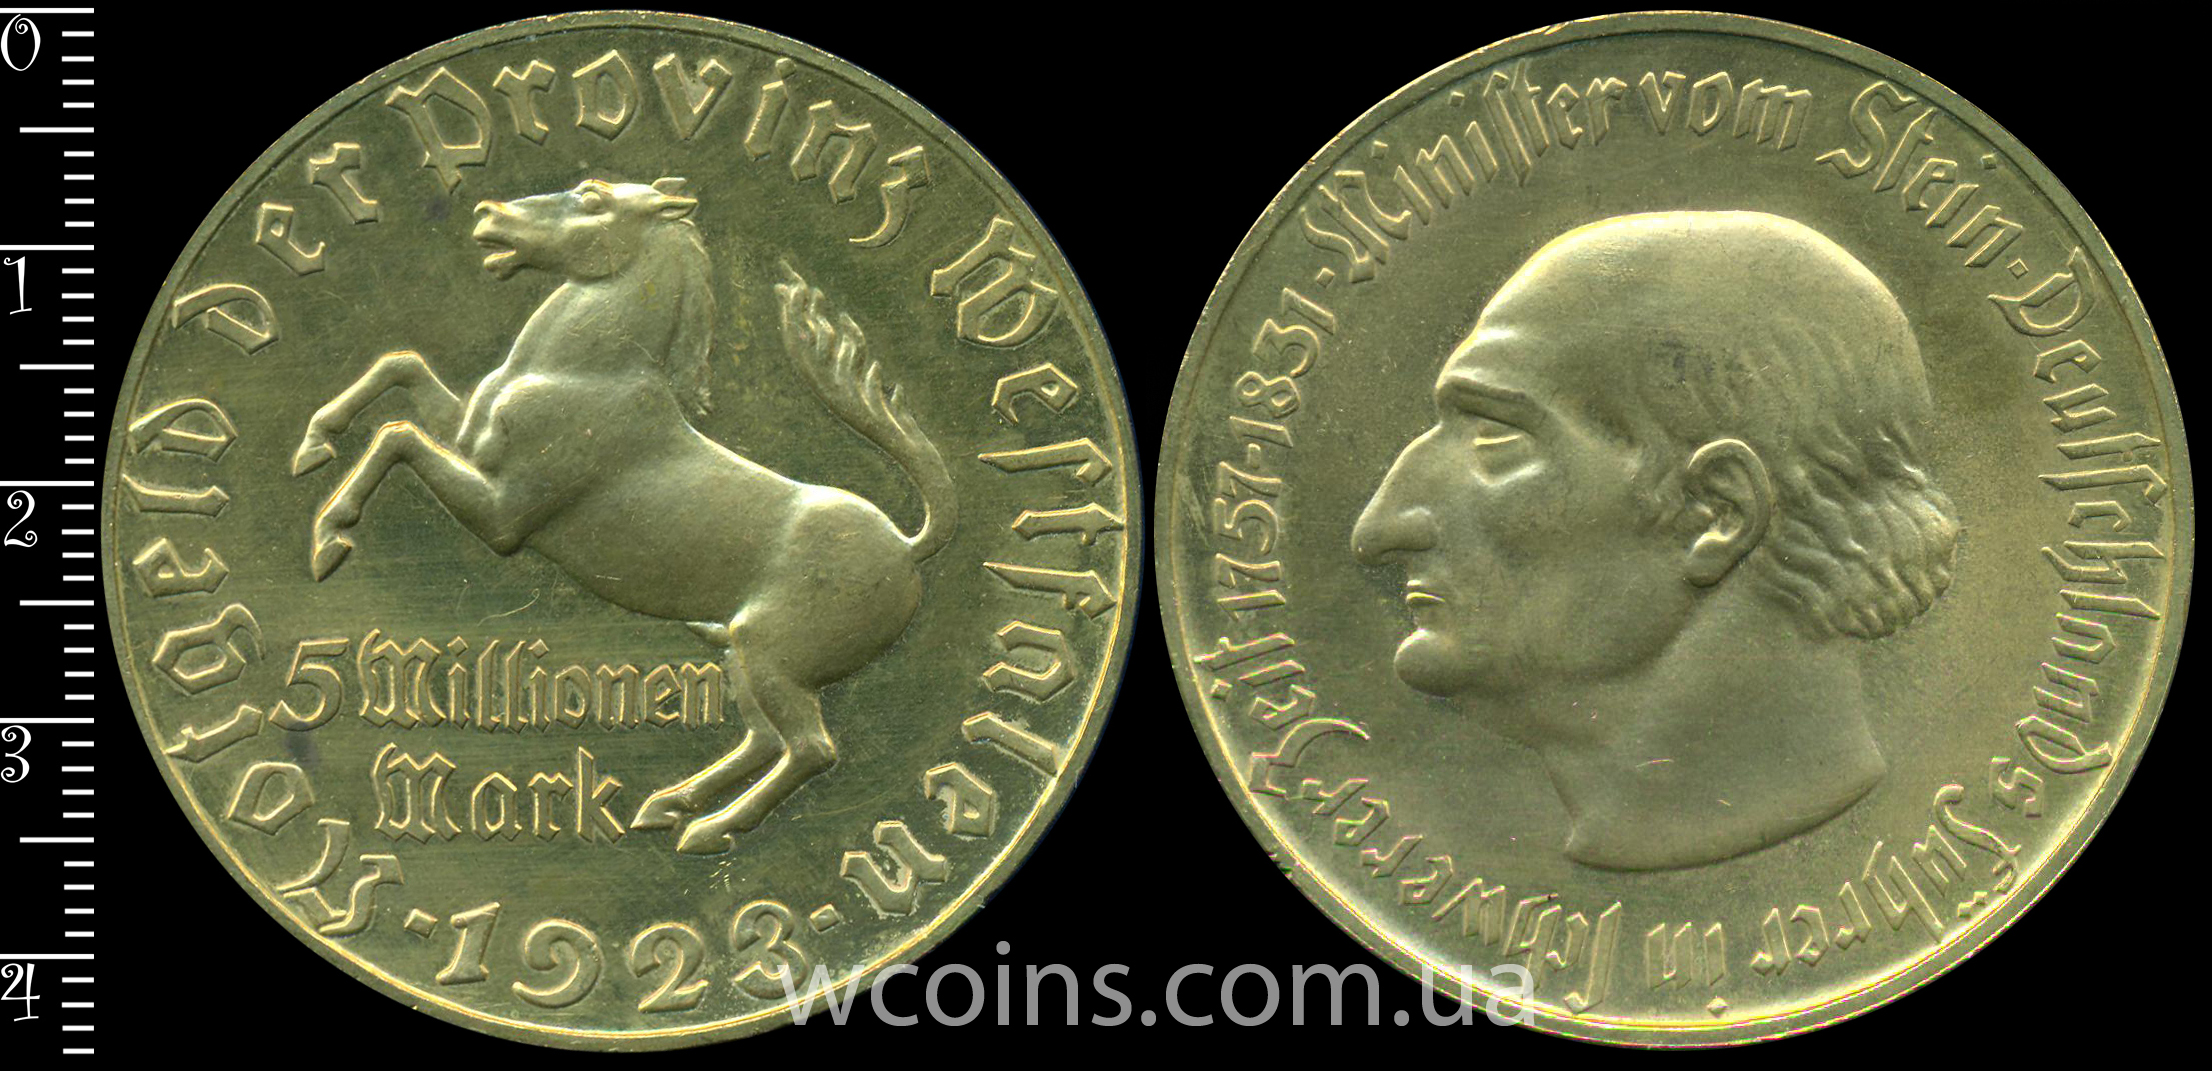 Coin Germany - notgelds 1914 - 1924 5 million marks 1923